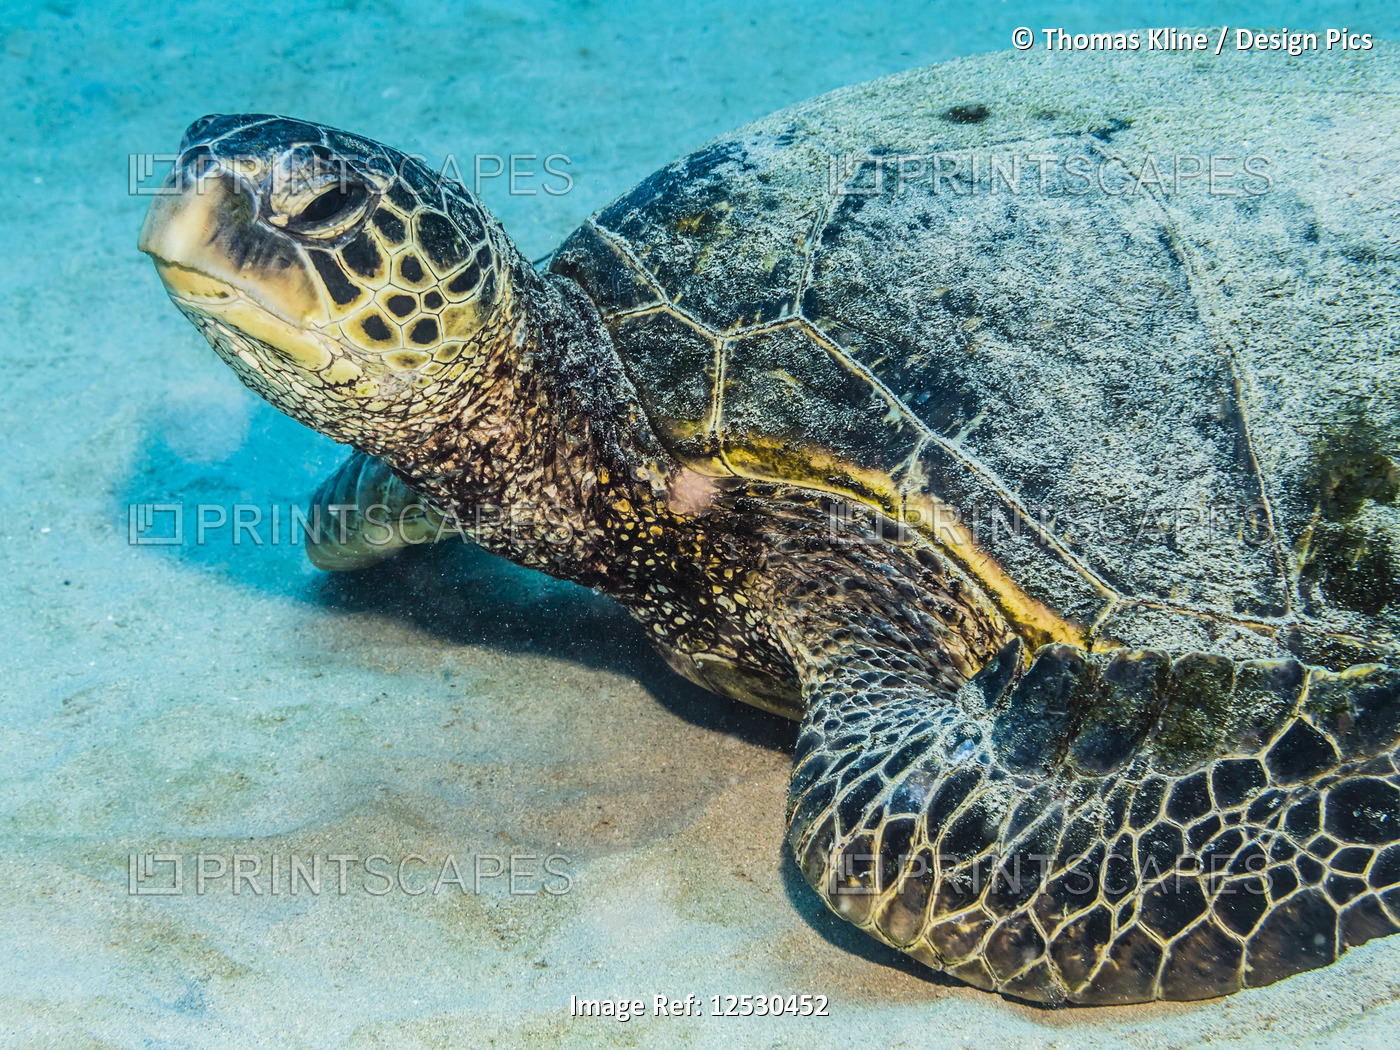 Green Sea Turtle resting on a sandy bottom